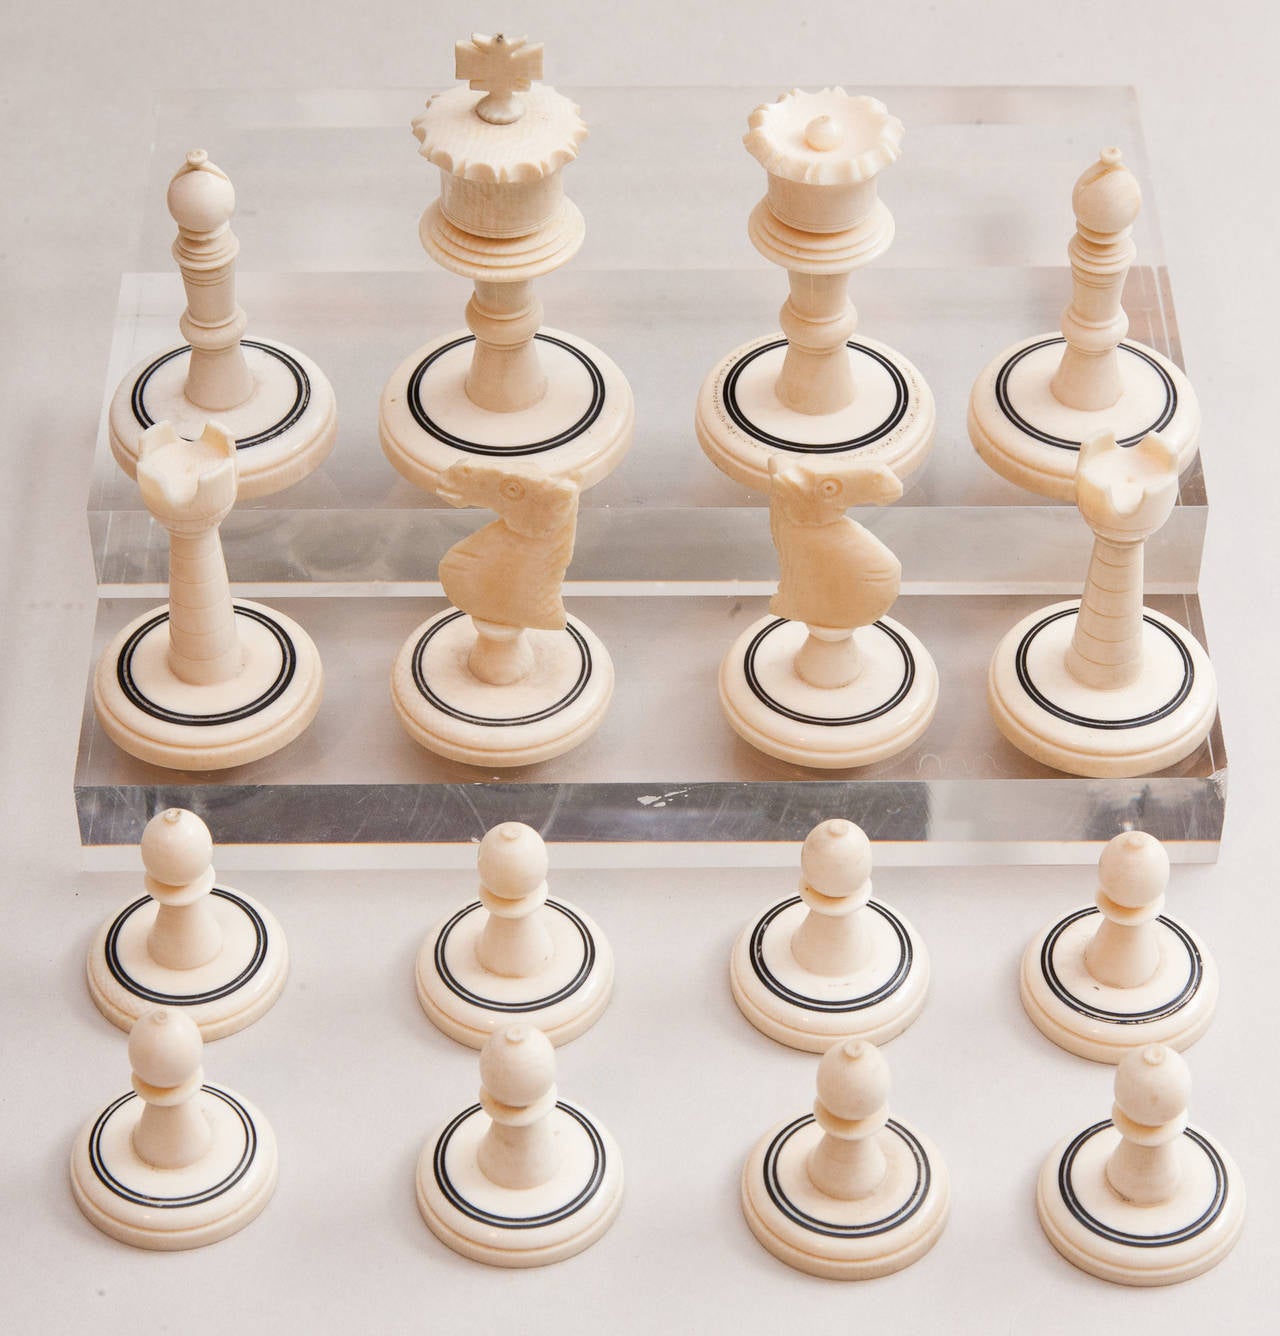 20th Century Art Deco Ivory Chess Set